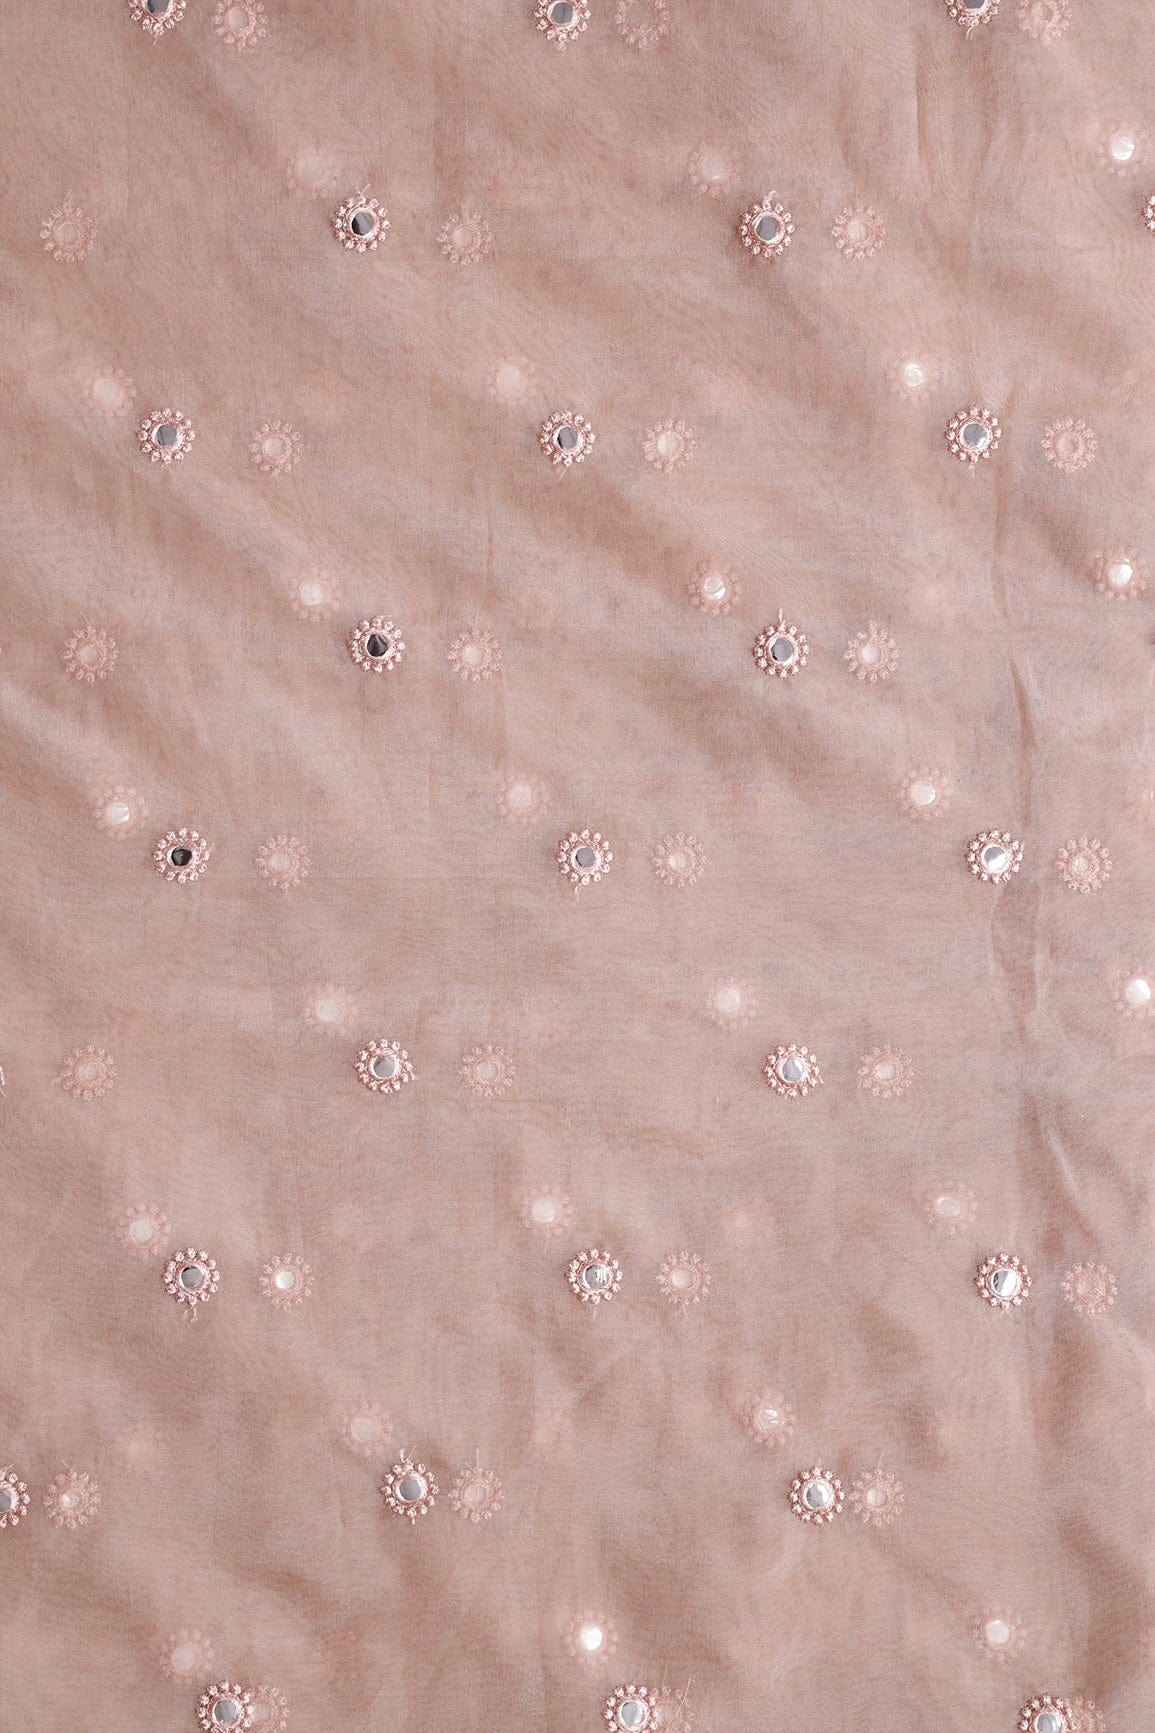 doeraa LEHENGA SET Copy of Cream And Coral Pink Unstitched Lehenga Set Fabric (3 Piece)